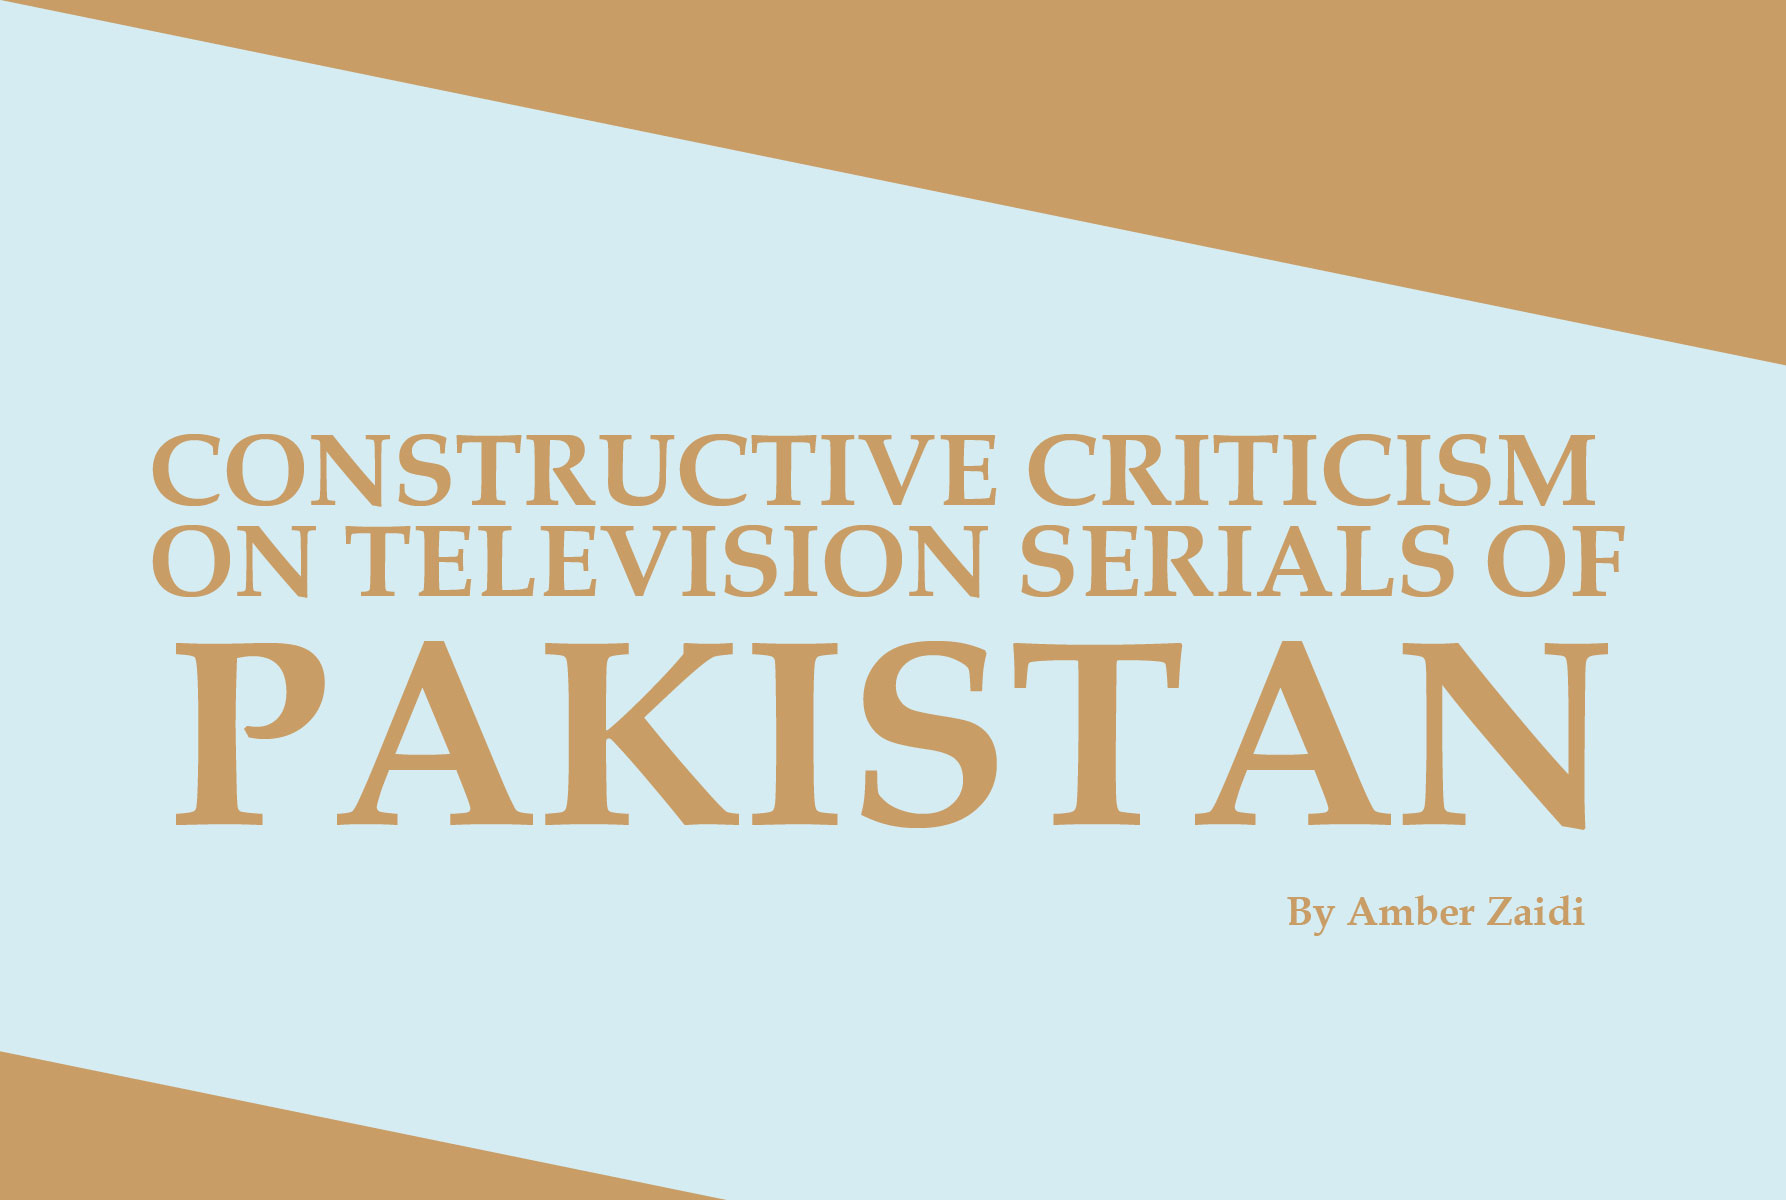 CONSTRUCTIVE CRITICISM ON TELEVISION SERIALS OF PAKISTAN